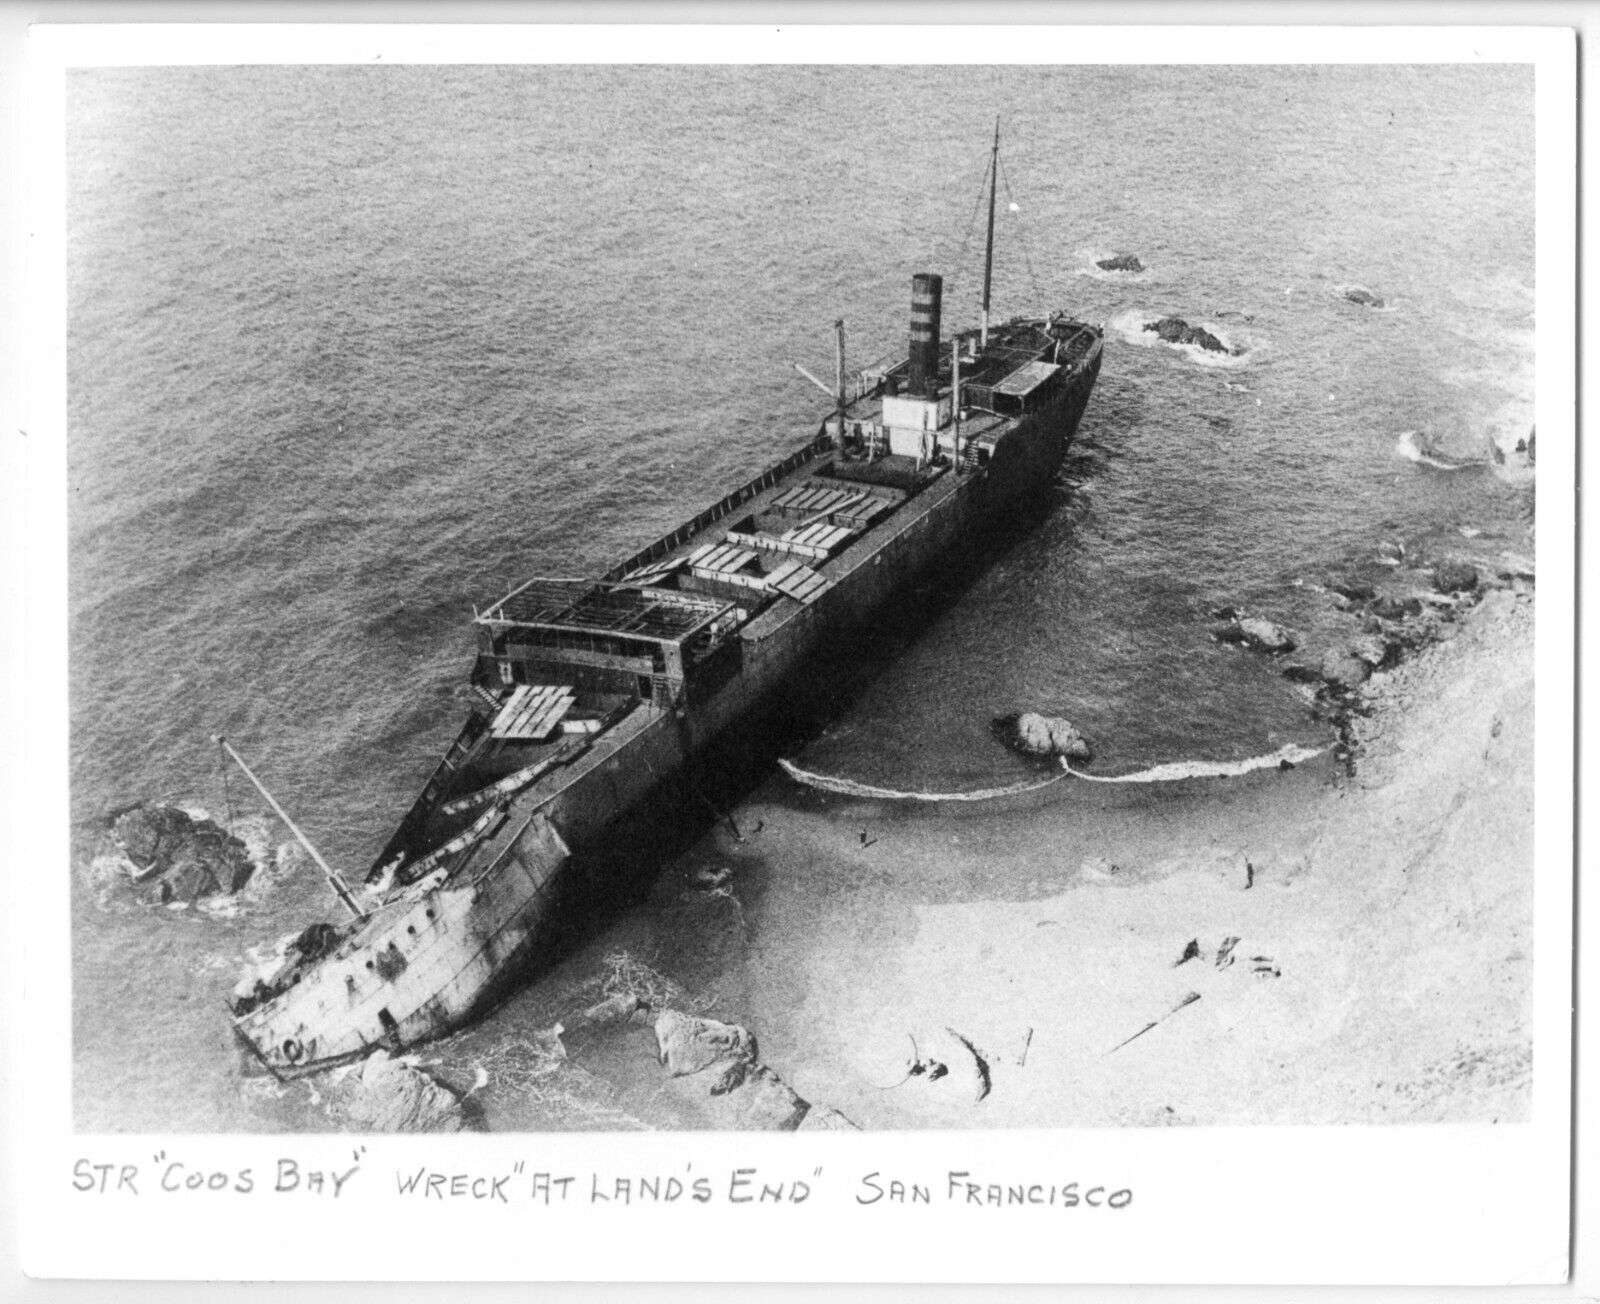 1928 SAN FRANCISCO SS COOS BAY SHIPWRECK off LANDS END & SUTRO BATHS~8x10\